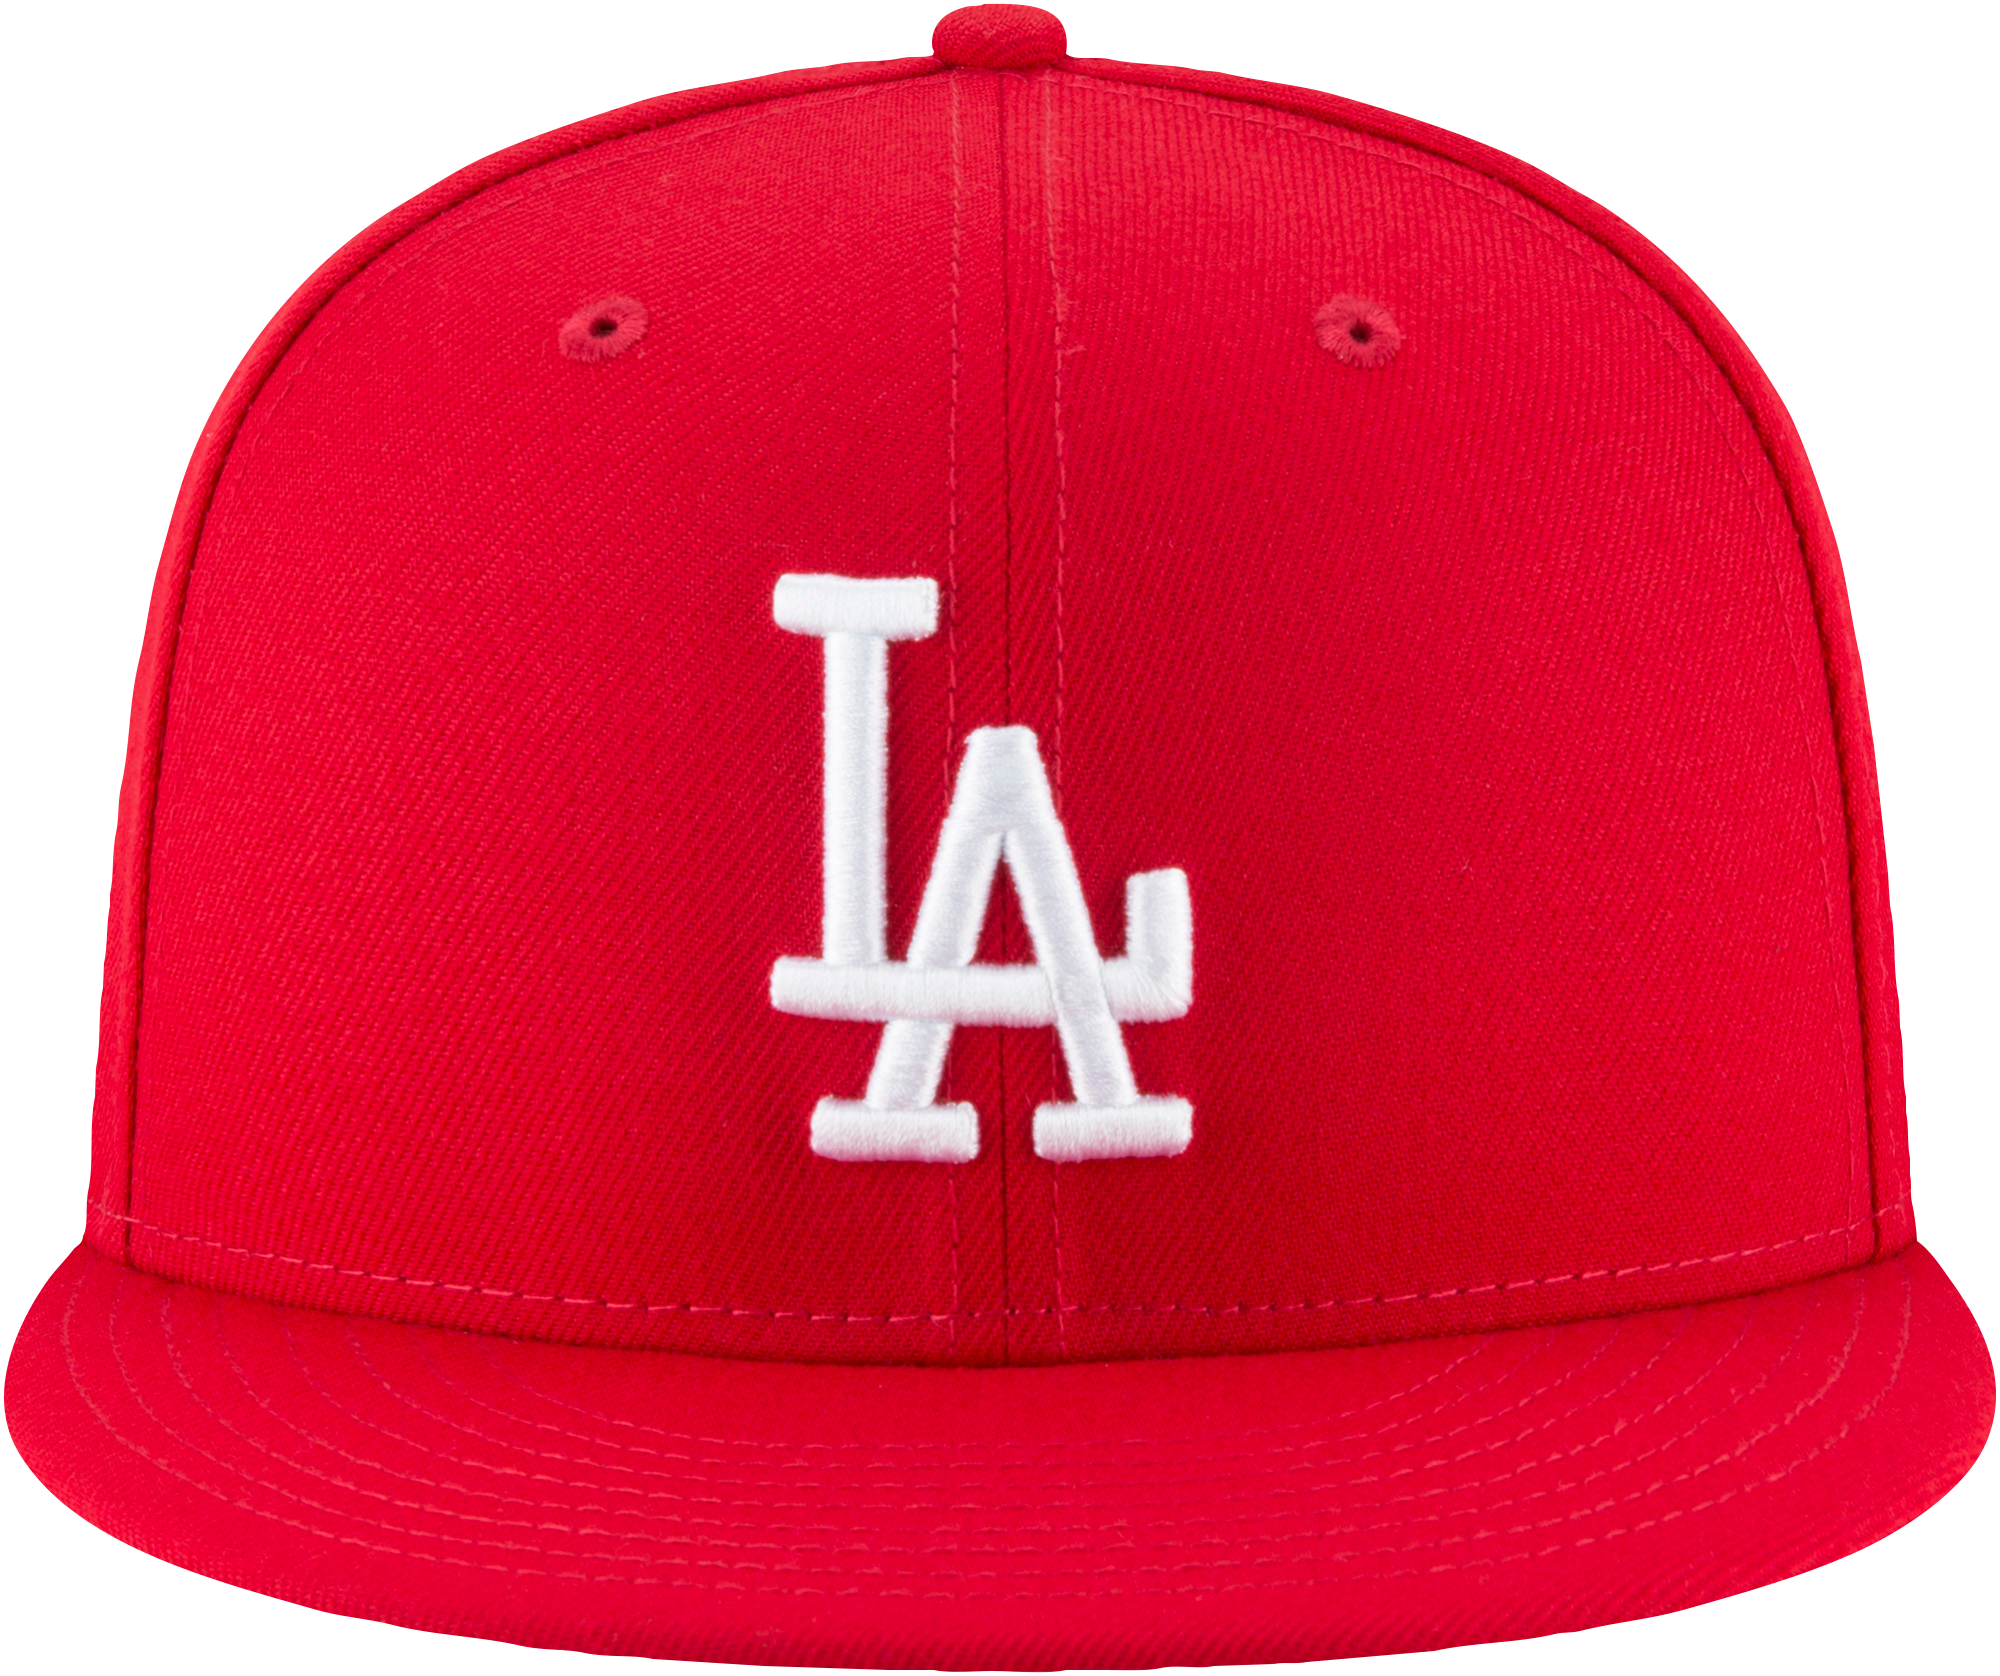 New Era Dodgers 59Fifty Basic Cap